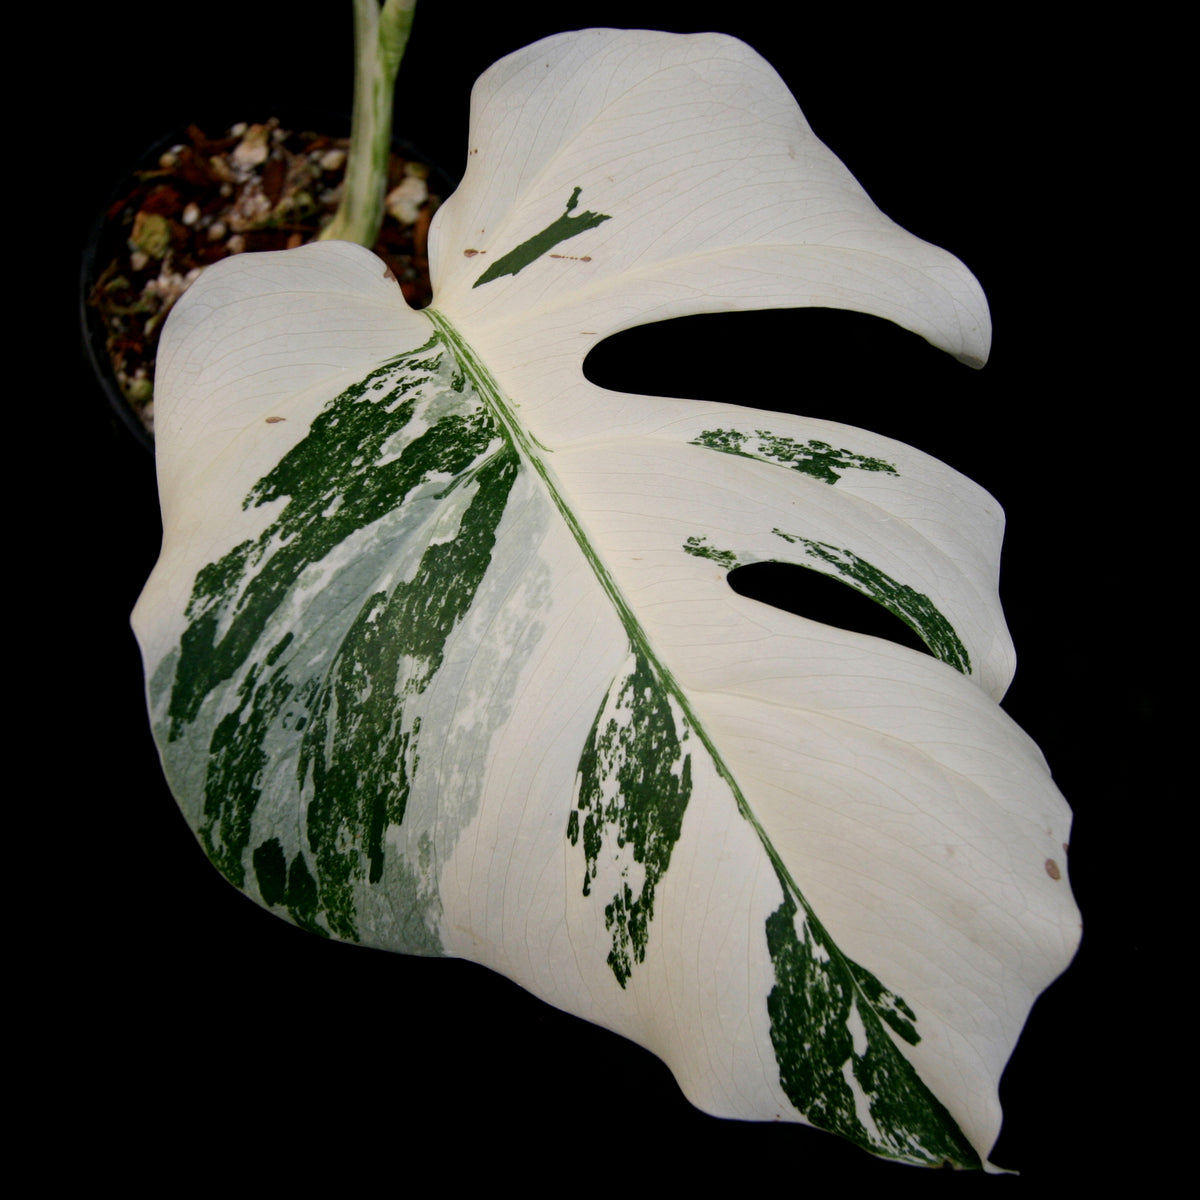 Monstera deliciosa var. borsigiana albo-variegata